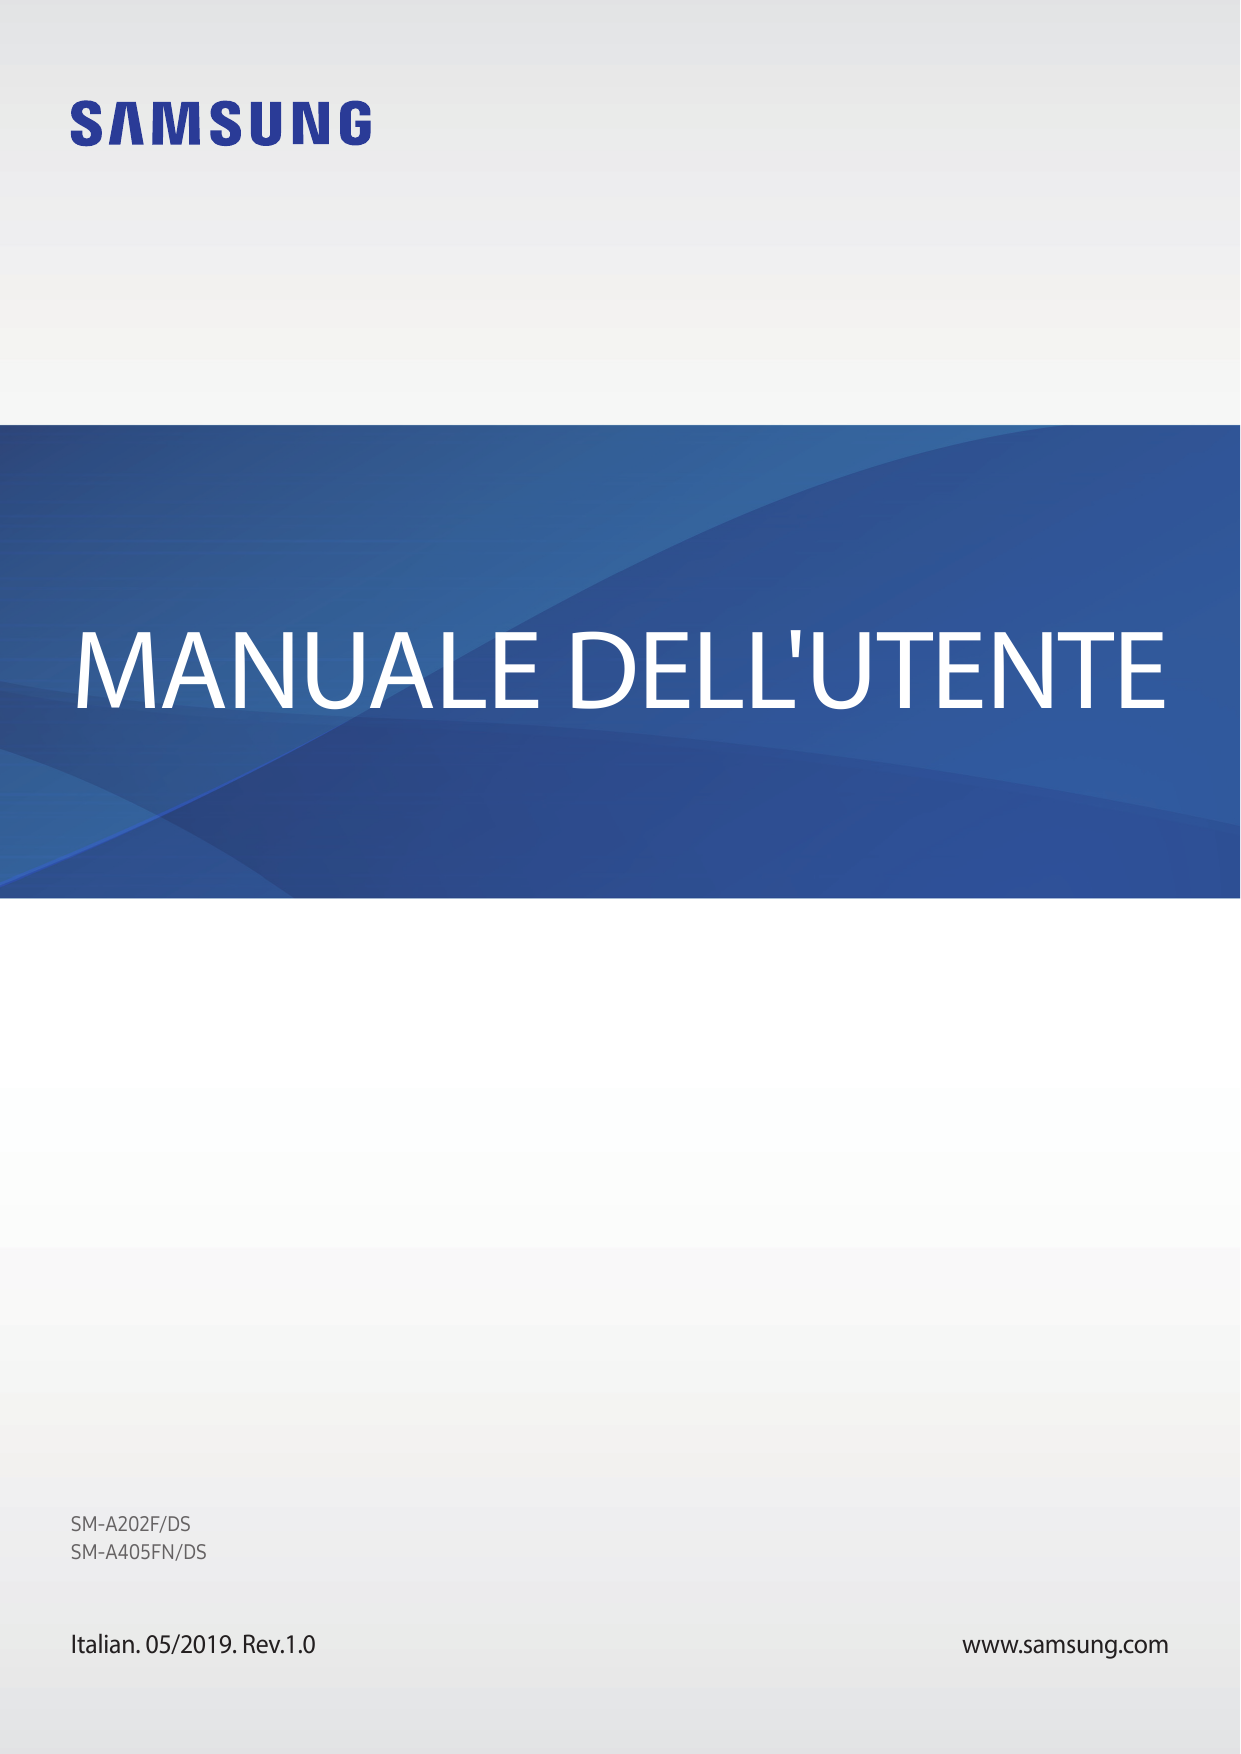 MANUALE DELL'UTENTESM-A202F/DSSM-A405FN/DSItalian. 05/2019. Rev.1.0www.samsung.com